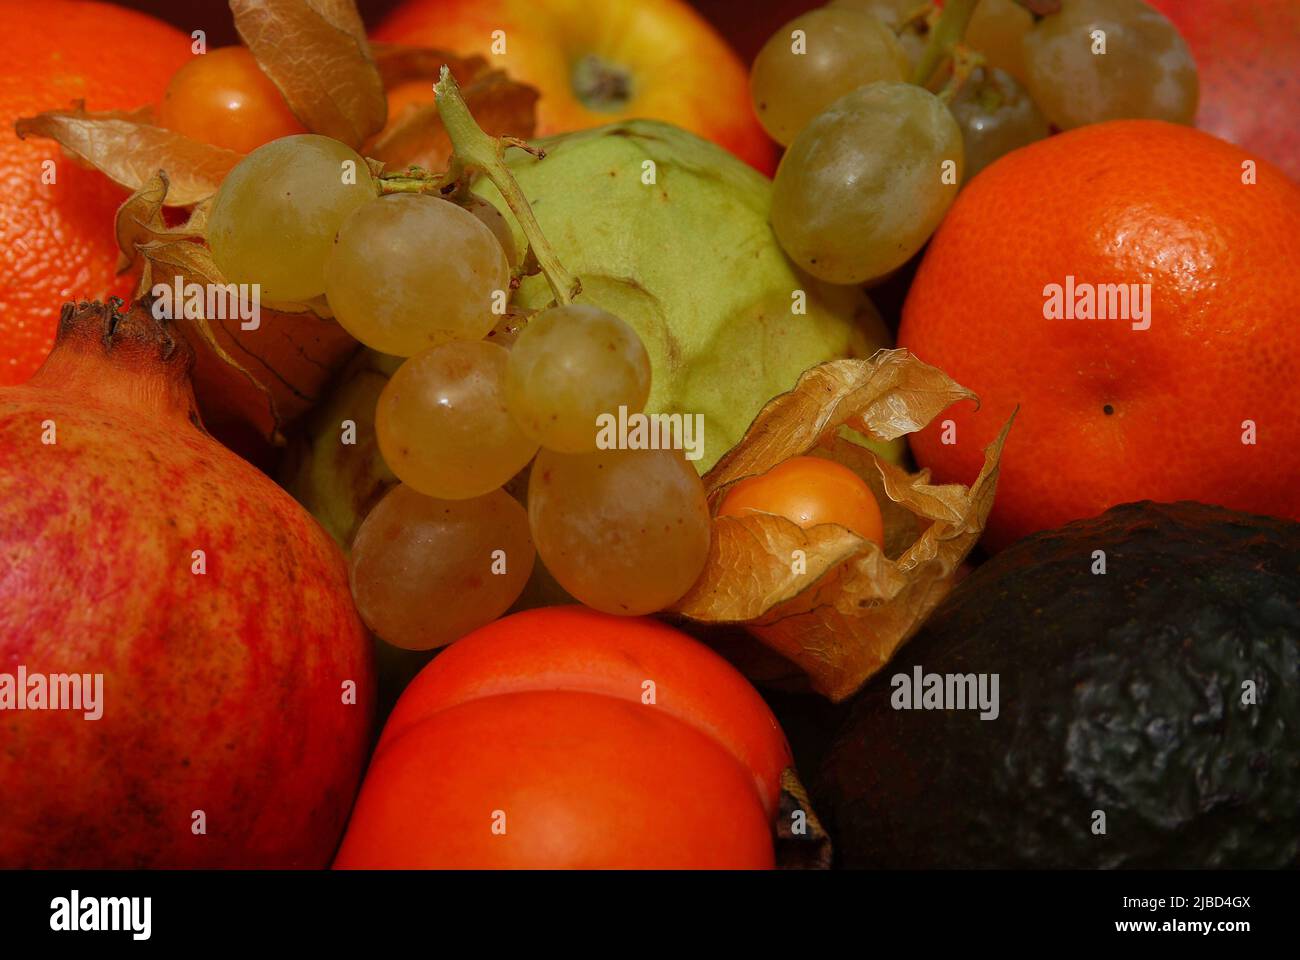 Selection of fresh seasonal fruits Stock Photo